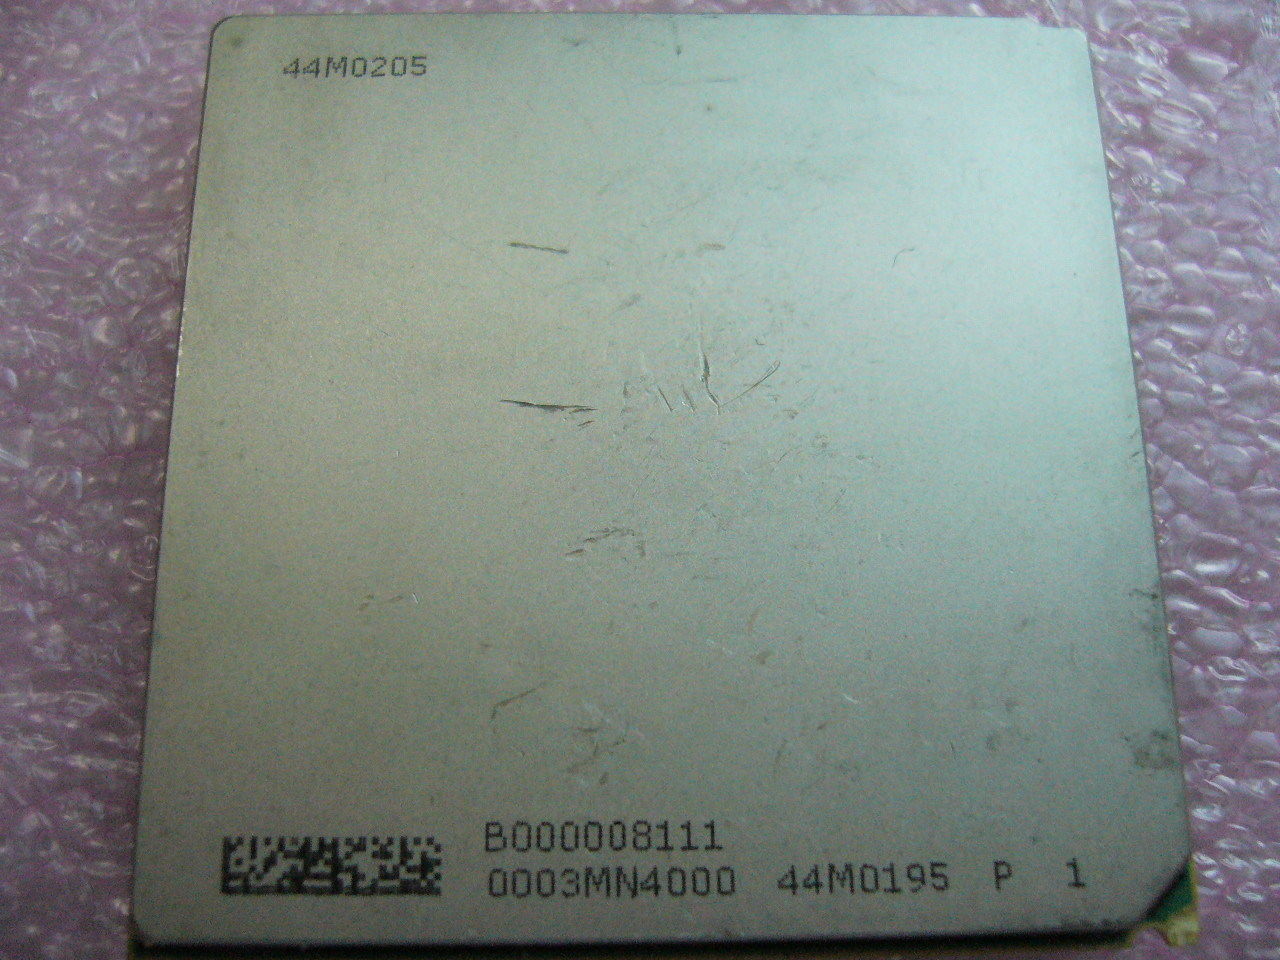 IBM Processor 44M0205, 44M0195 LGA2295 - Click Image to Close